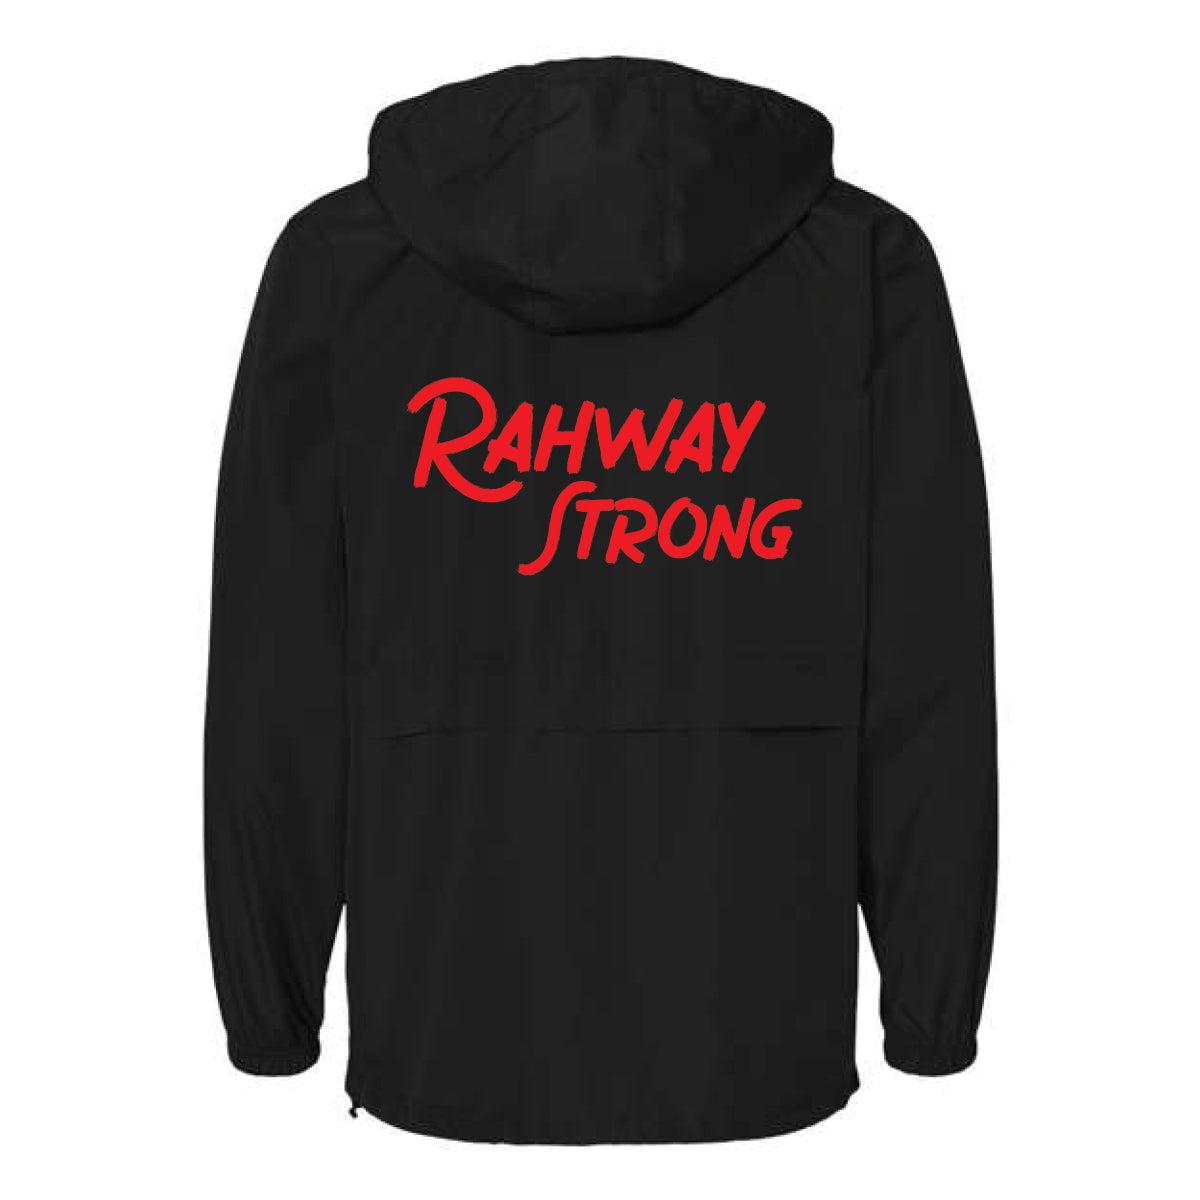 Rahway Strong Anorak Champion Jacket